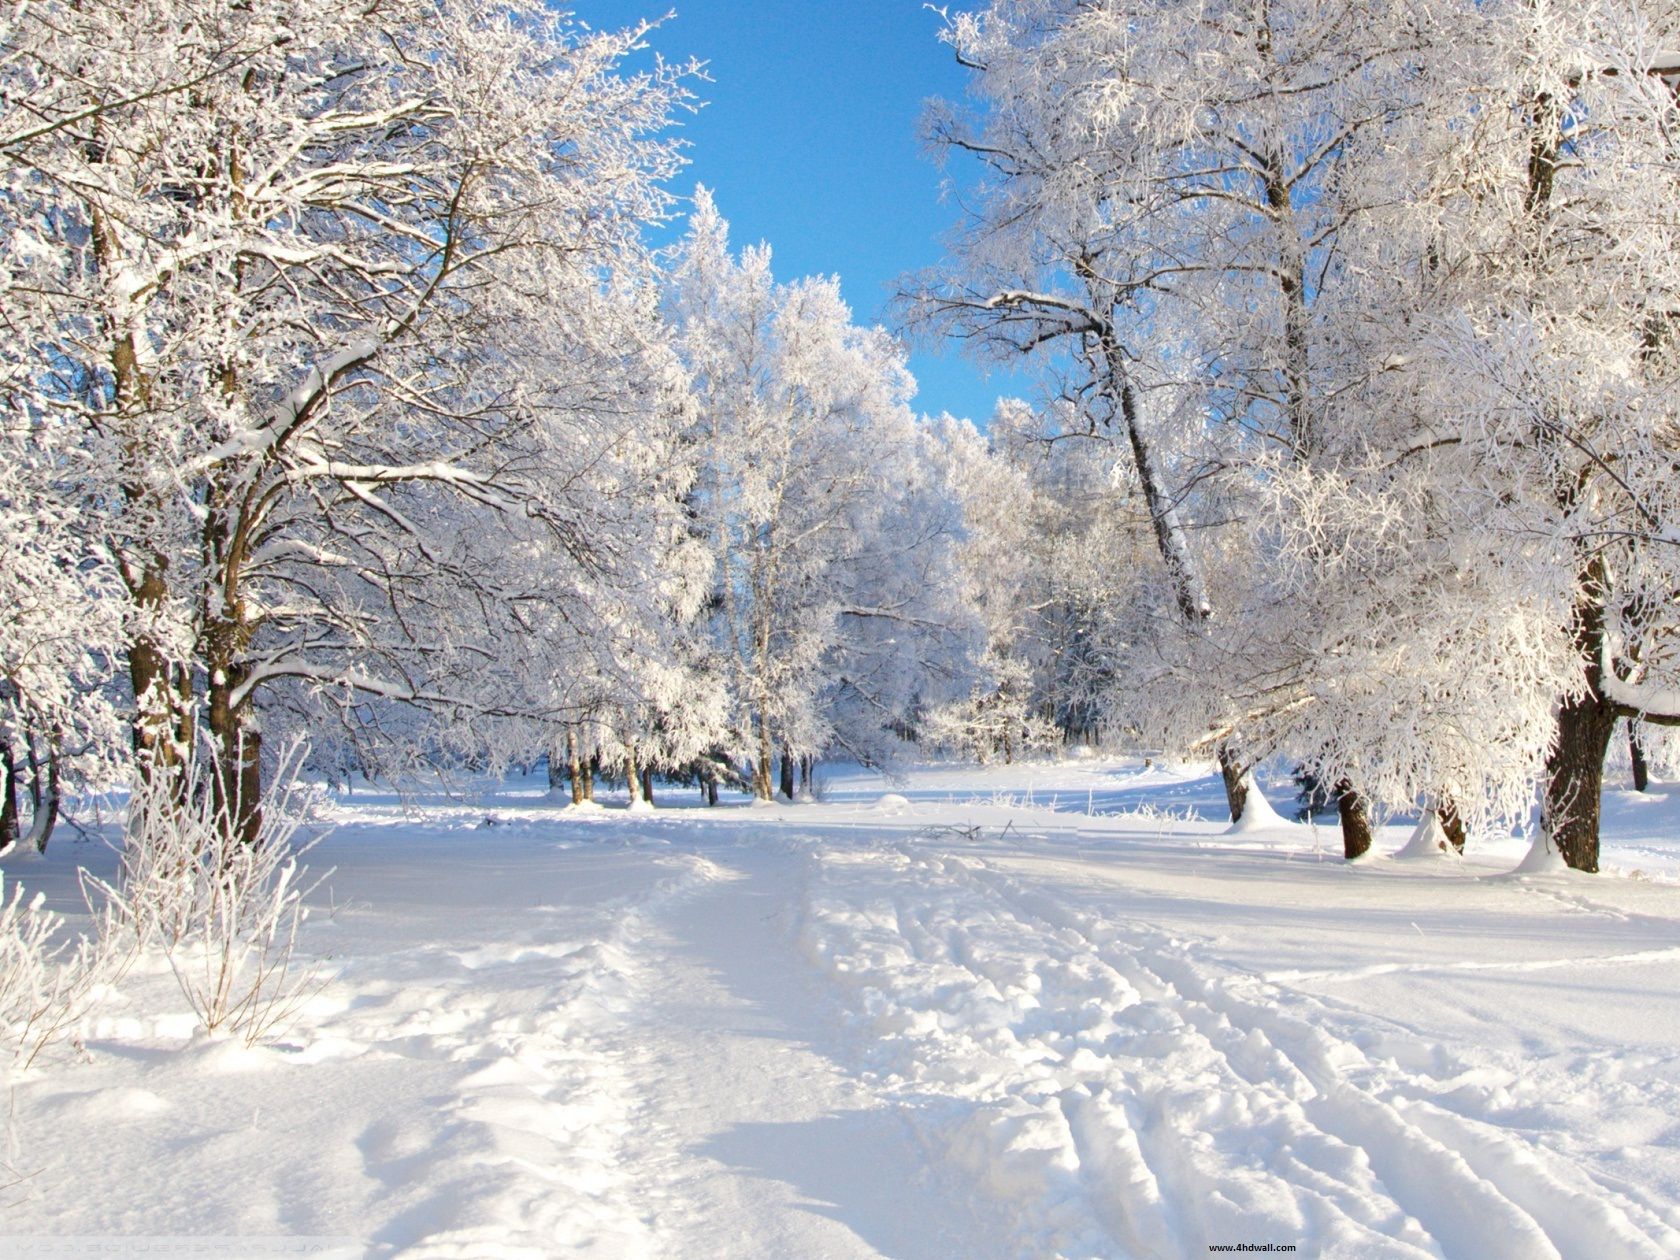 Free Wallpaper Downloads Download Free High Definition Winter